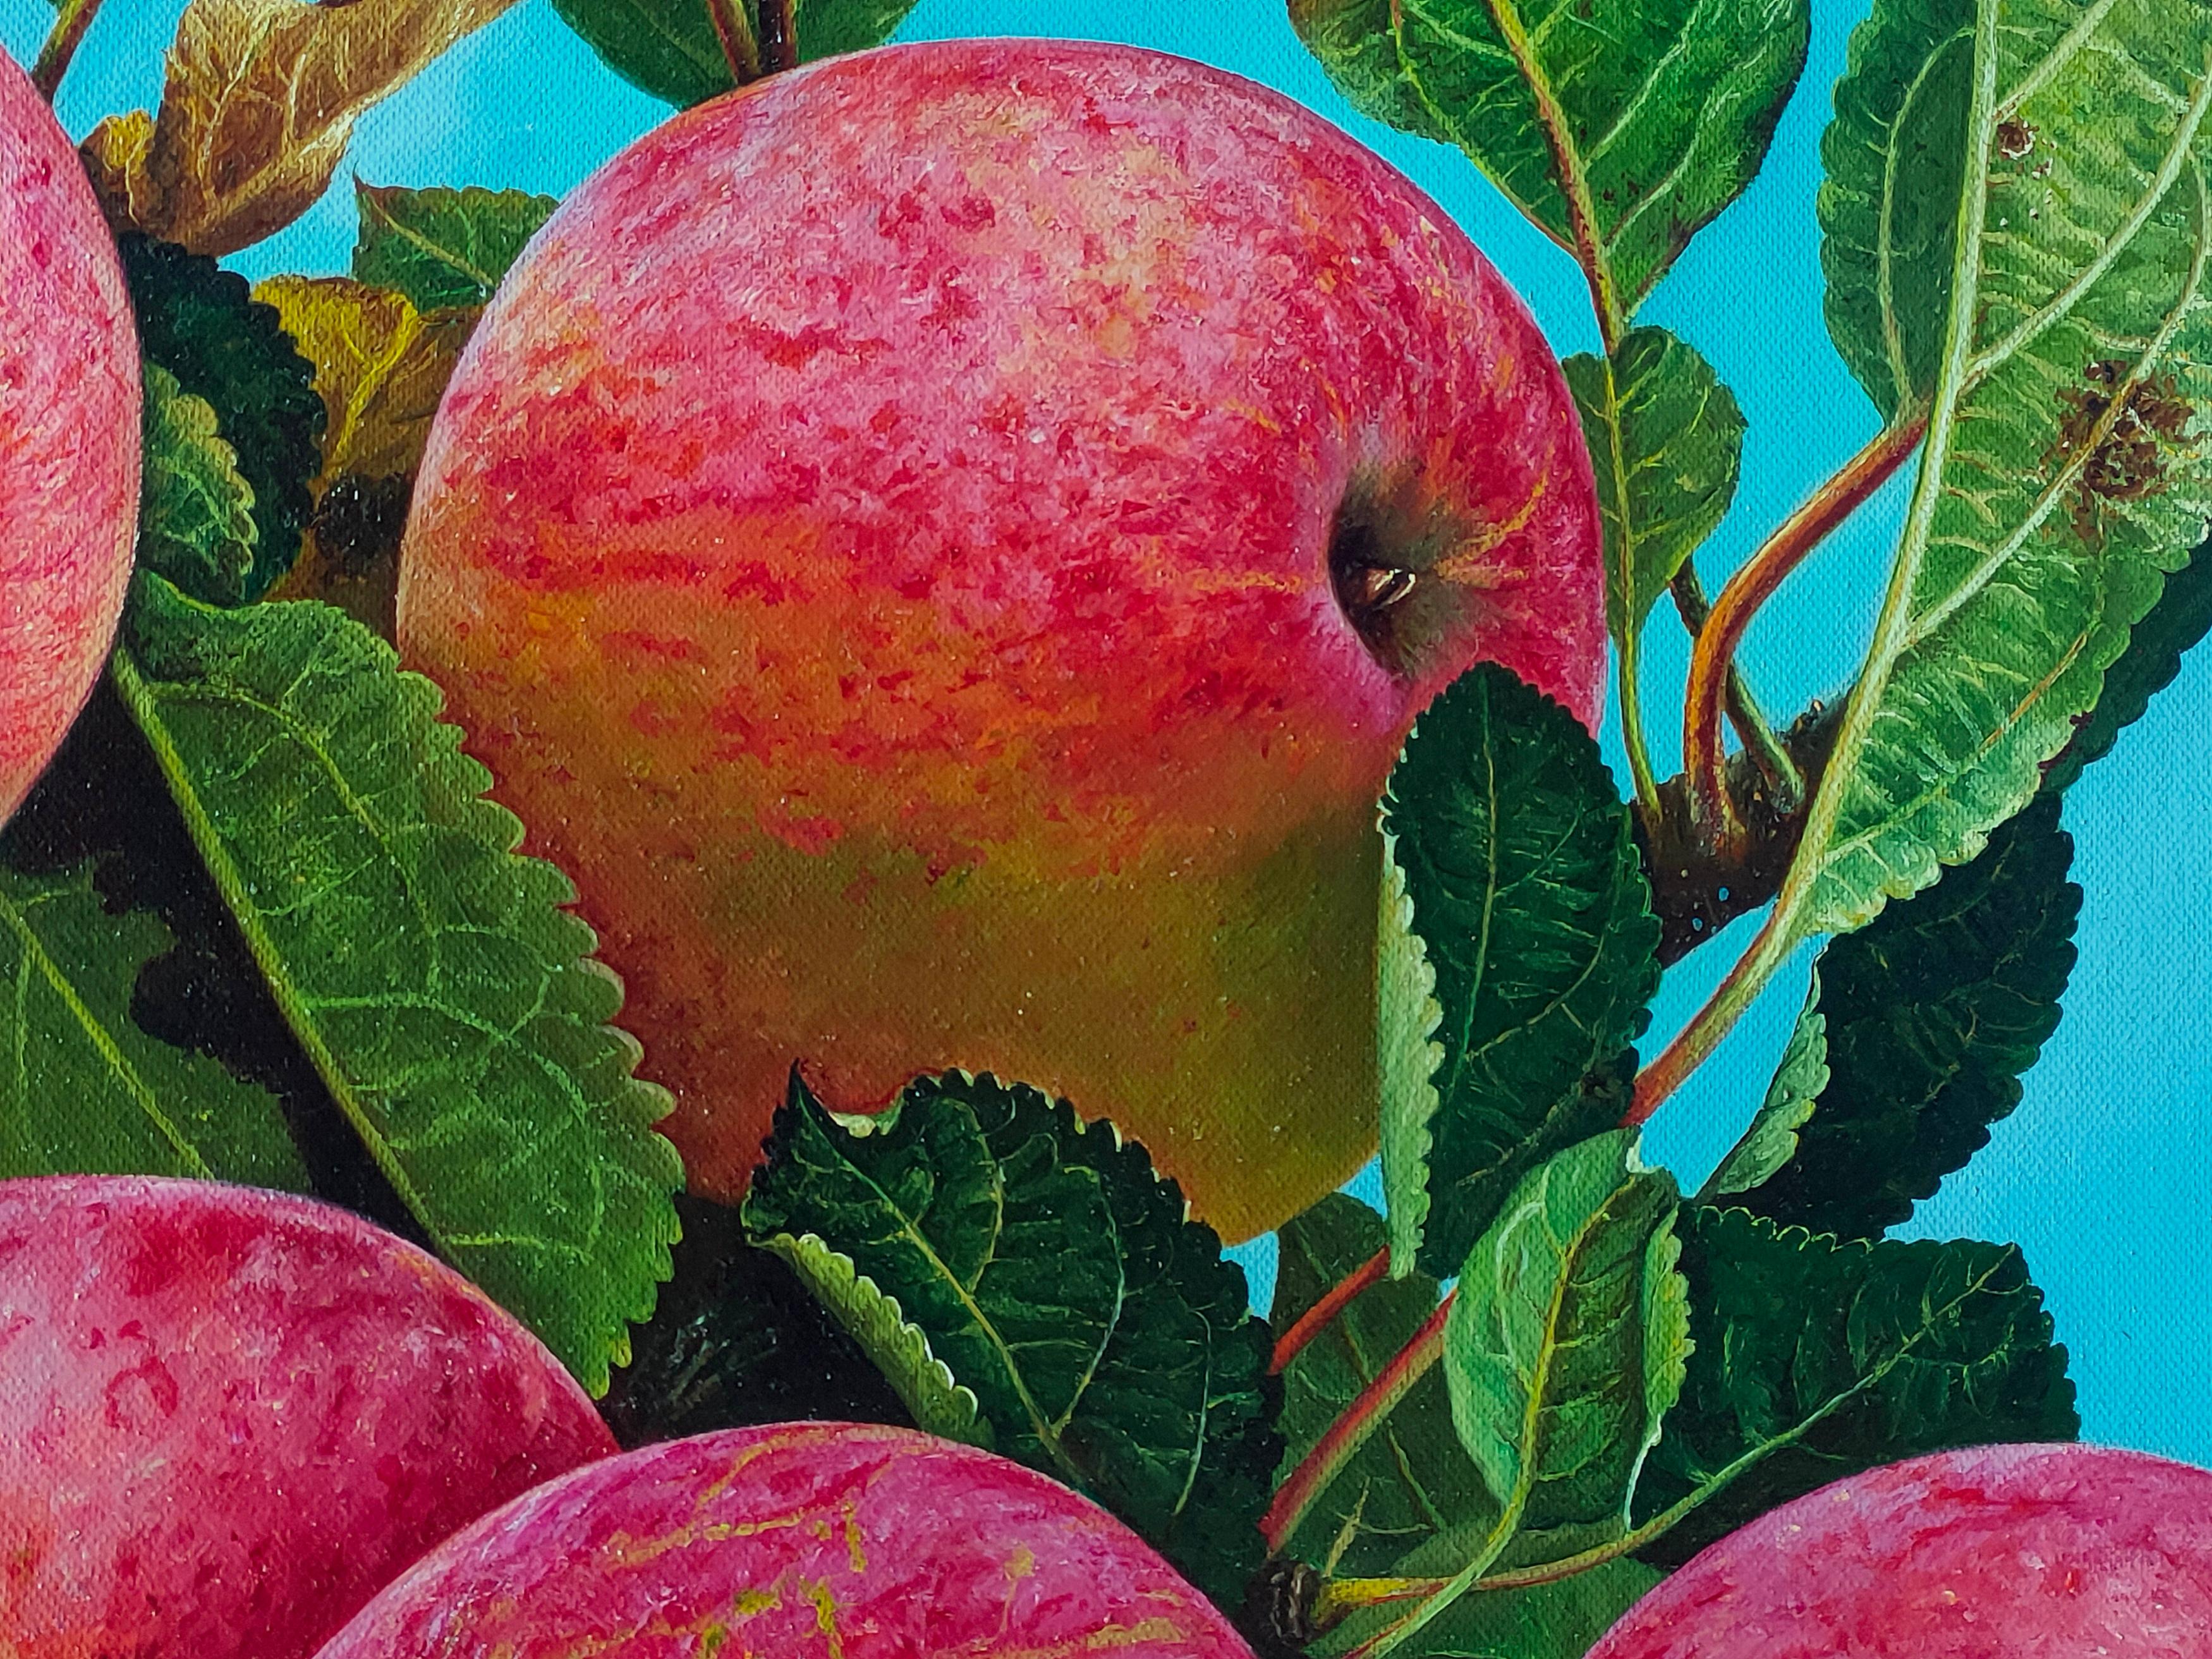 Bunch aus Äpfeln in Blau (Realismus), Painting, von Layong Jingga Probo